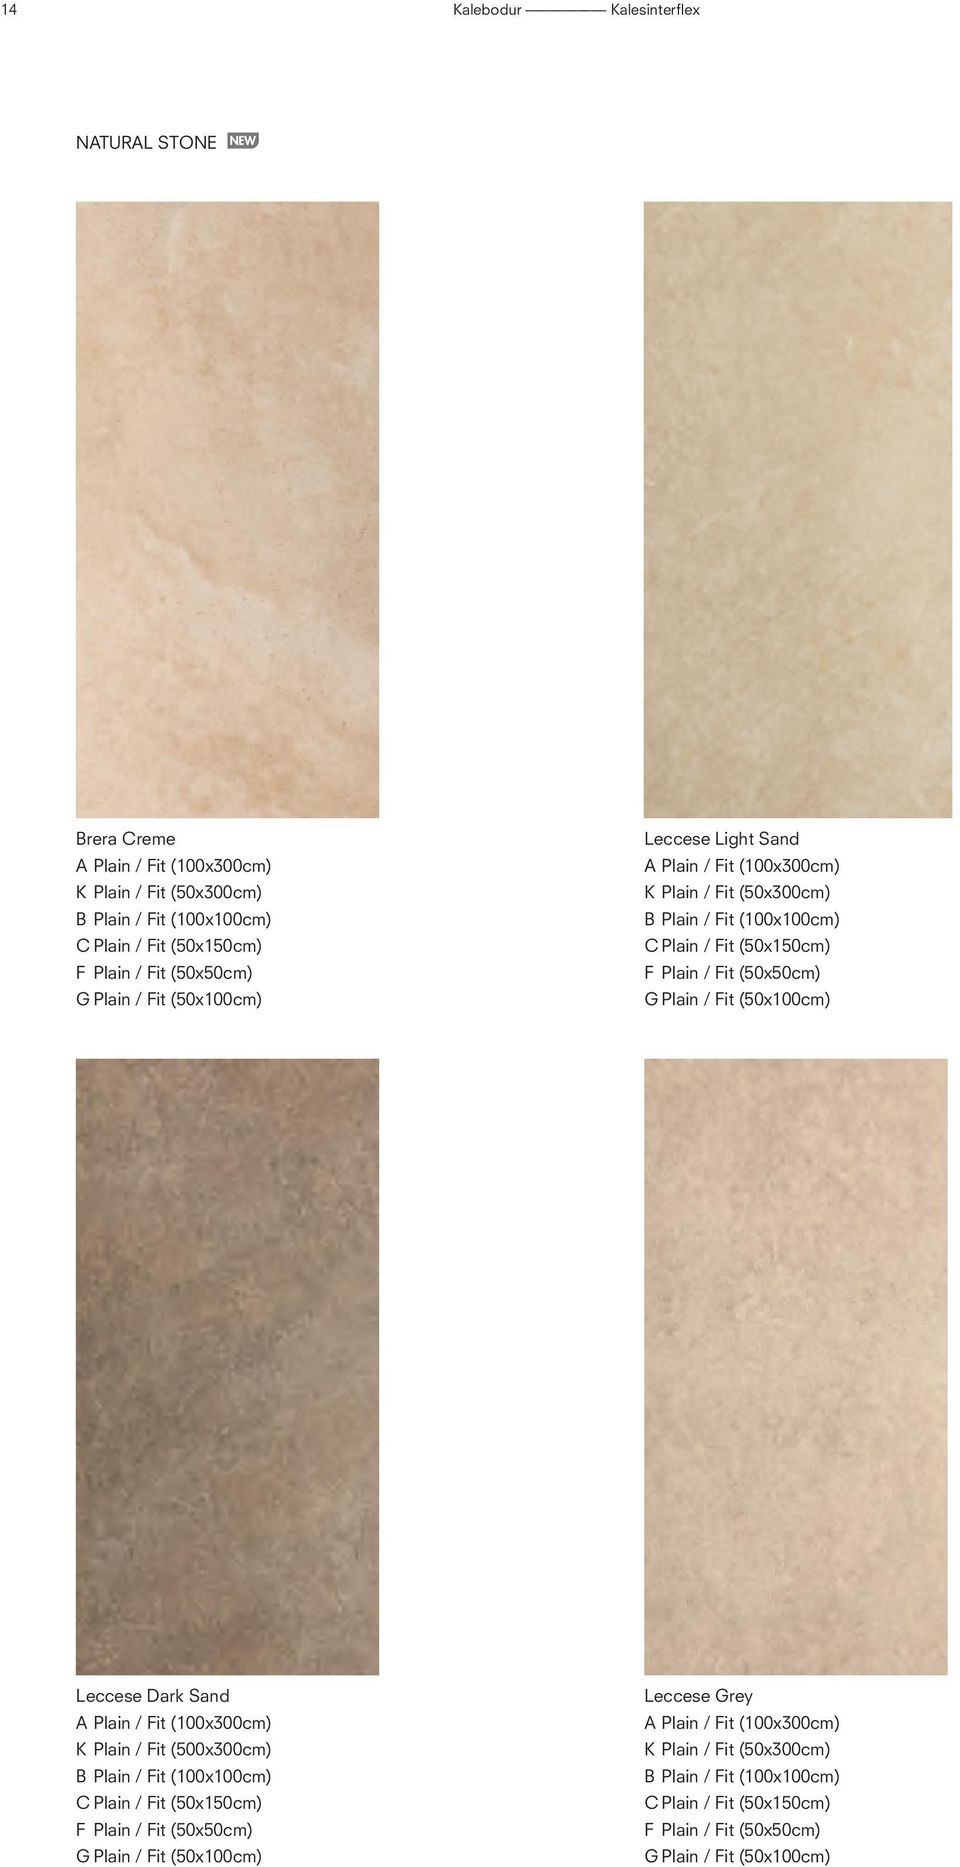 (50x50cm) G Plain / Fit (50x100cm) Leccese Dark Sand A Plain / Fit (100x300cm) K Plain / Fit (500x300cm) B Plain / Fit (100x100cm) C Plain / Fit (50x150cm) F Plain / Fit